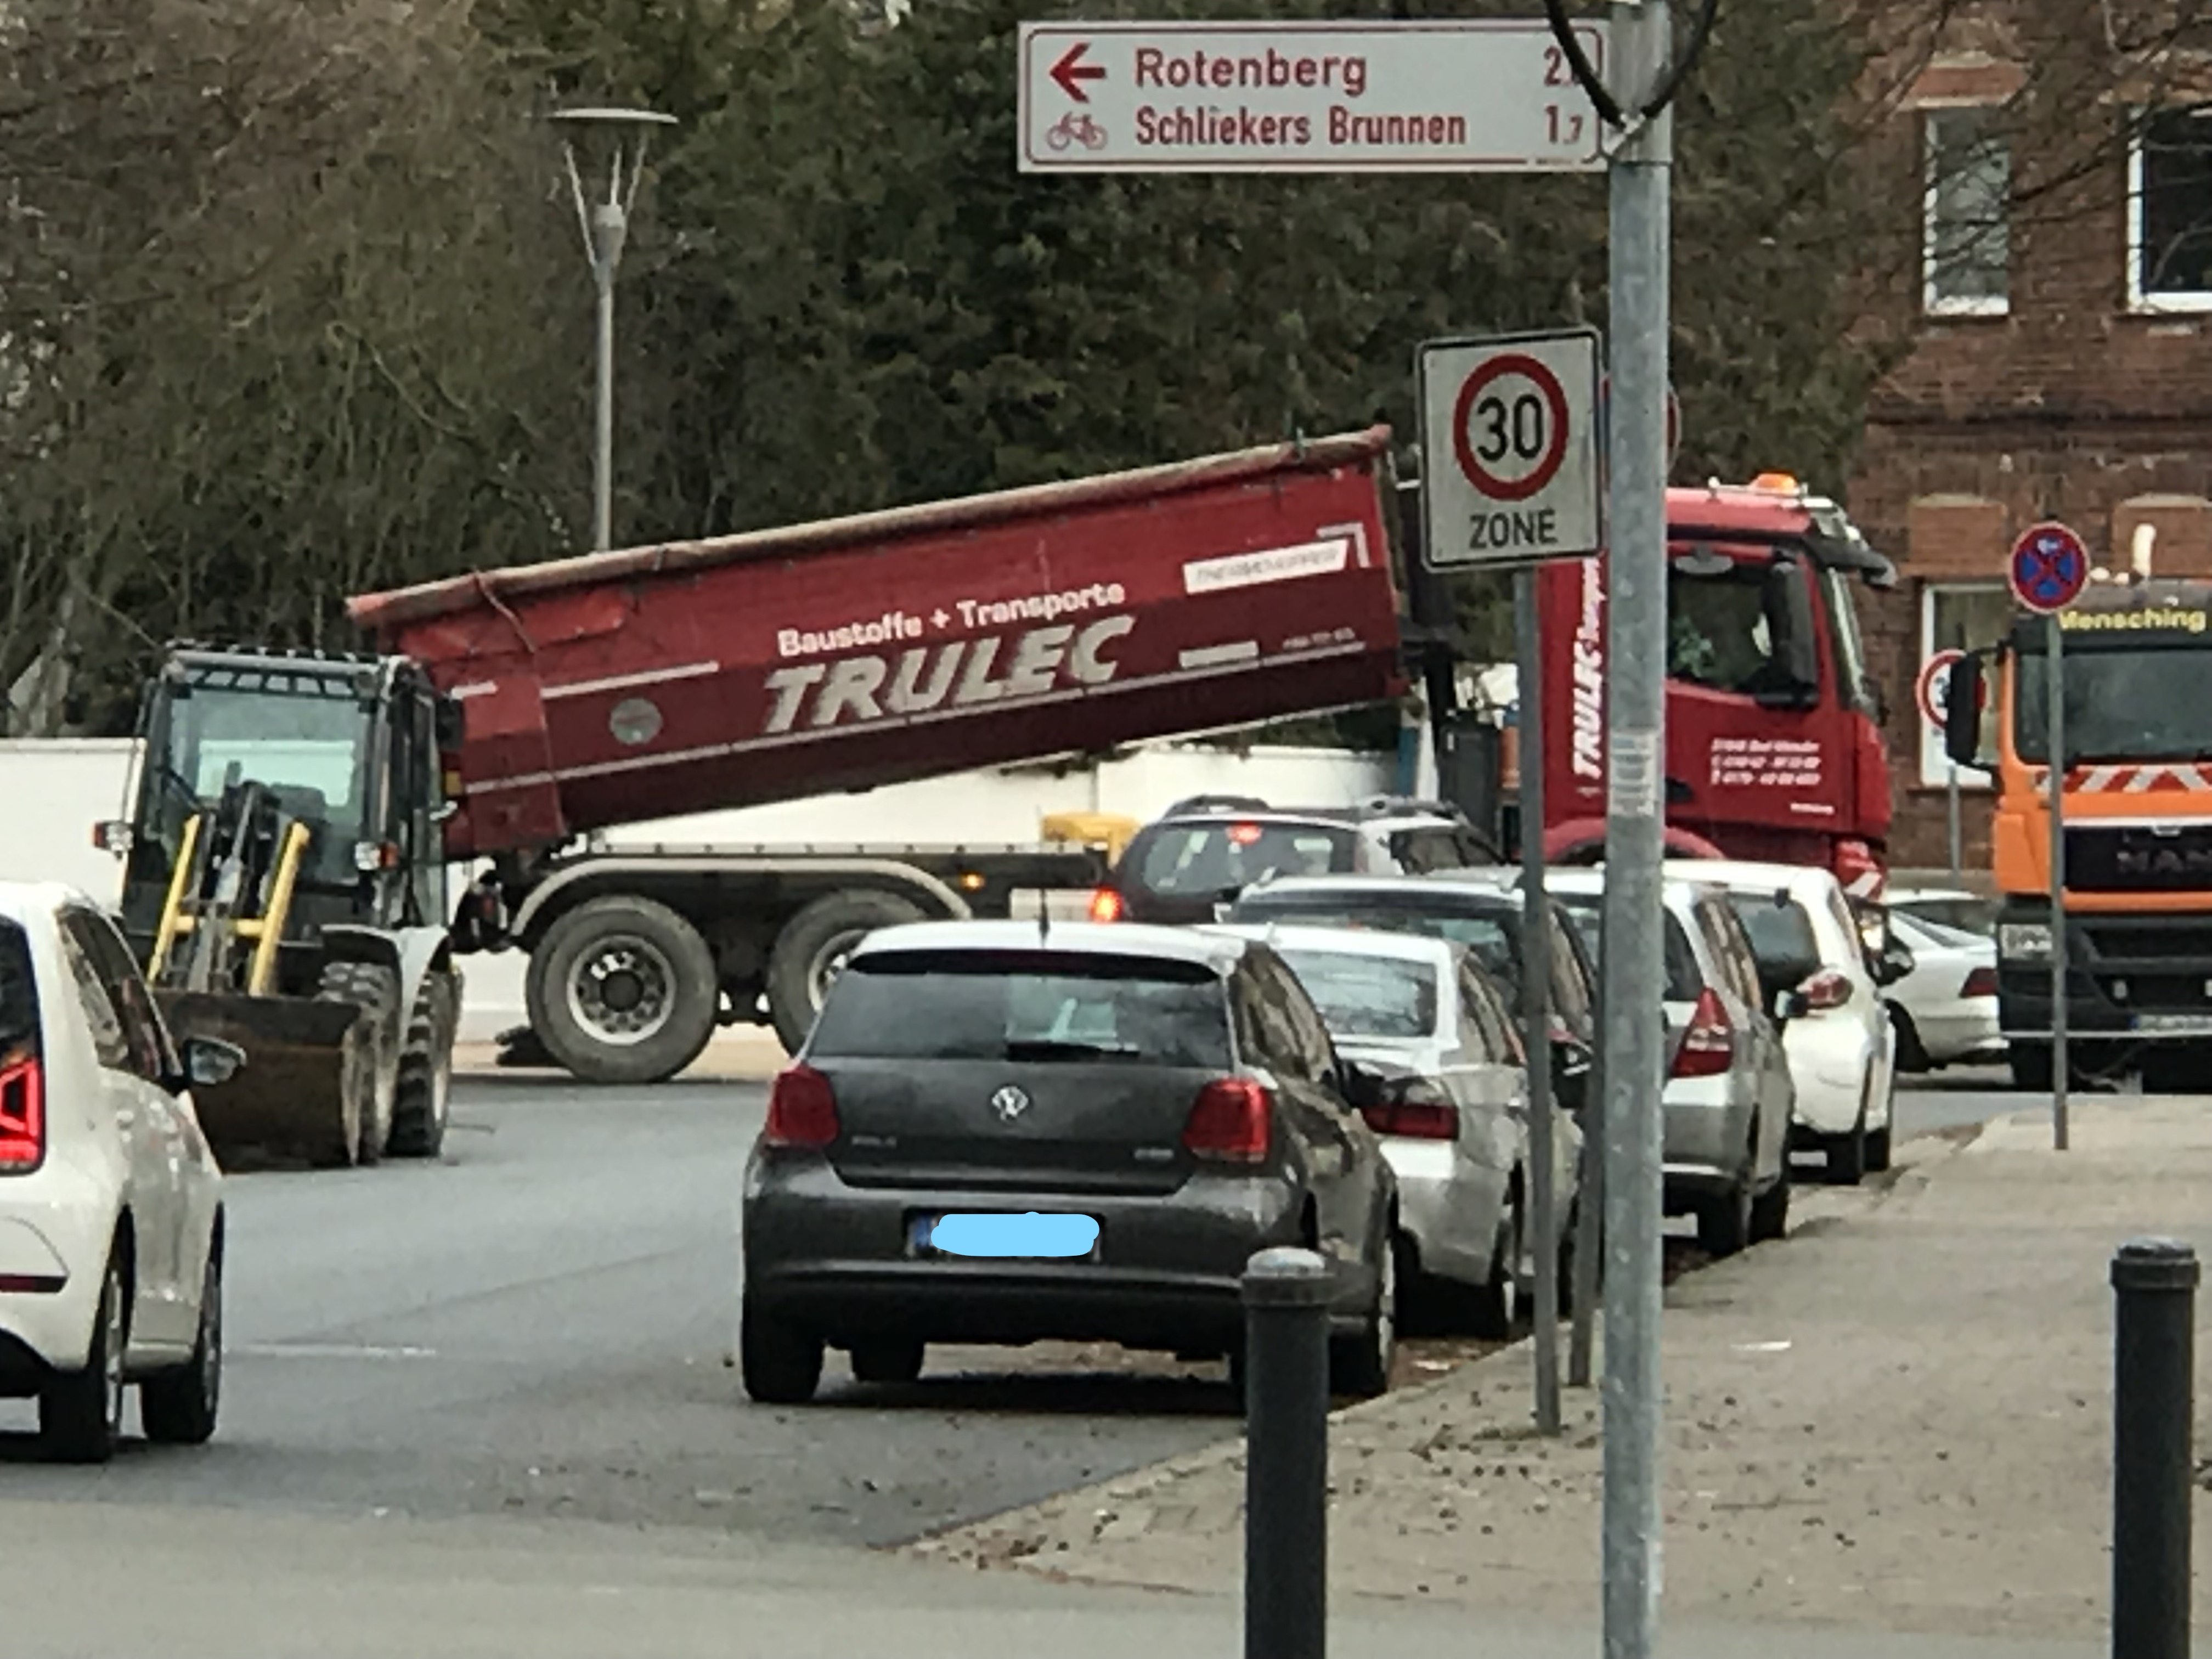 Bild 2 Trulec-Transporte in Bad Münder am Deister